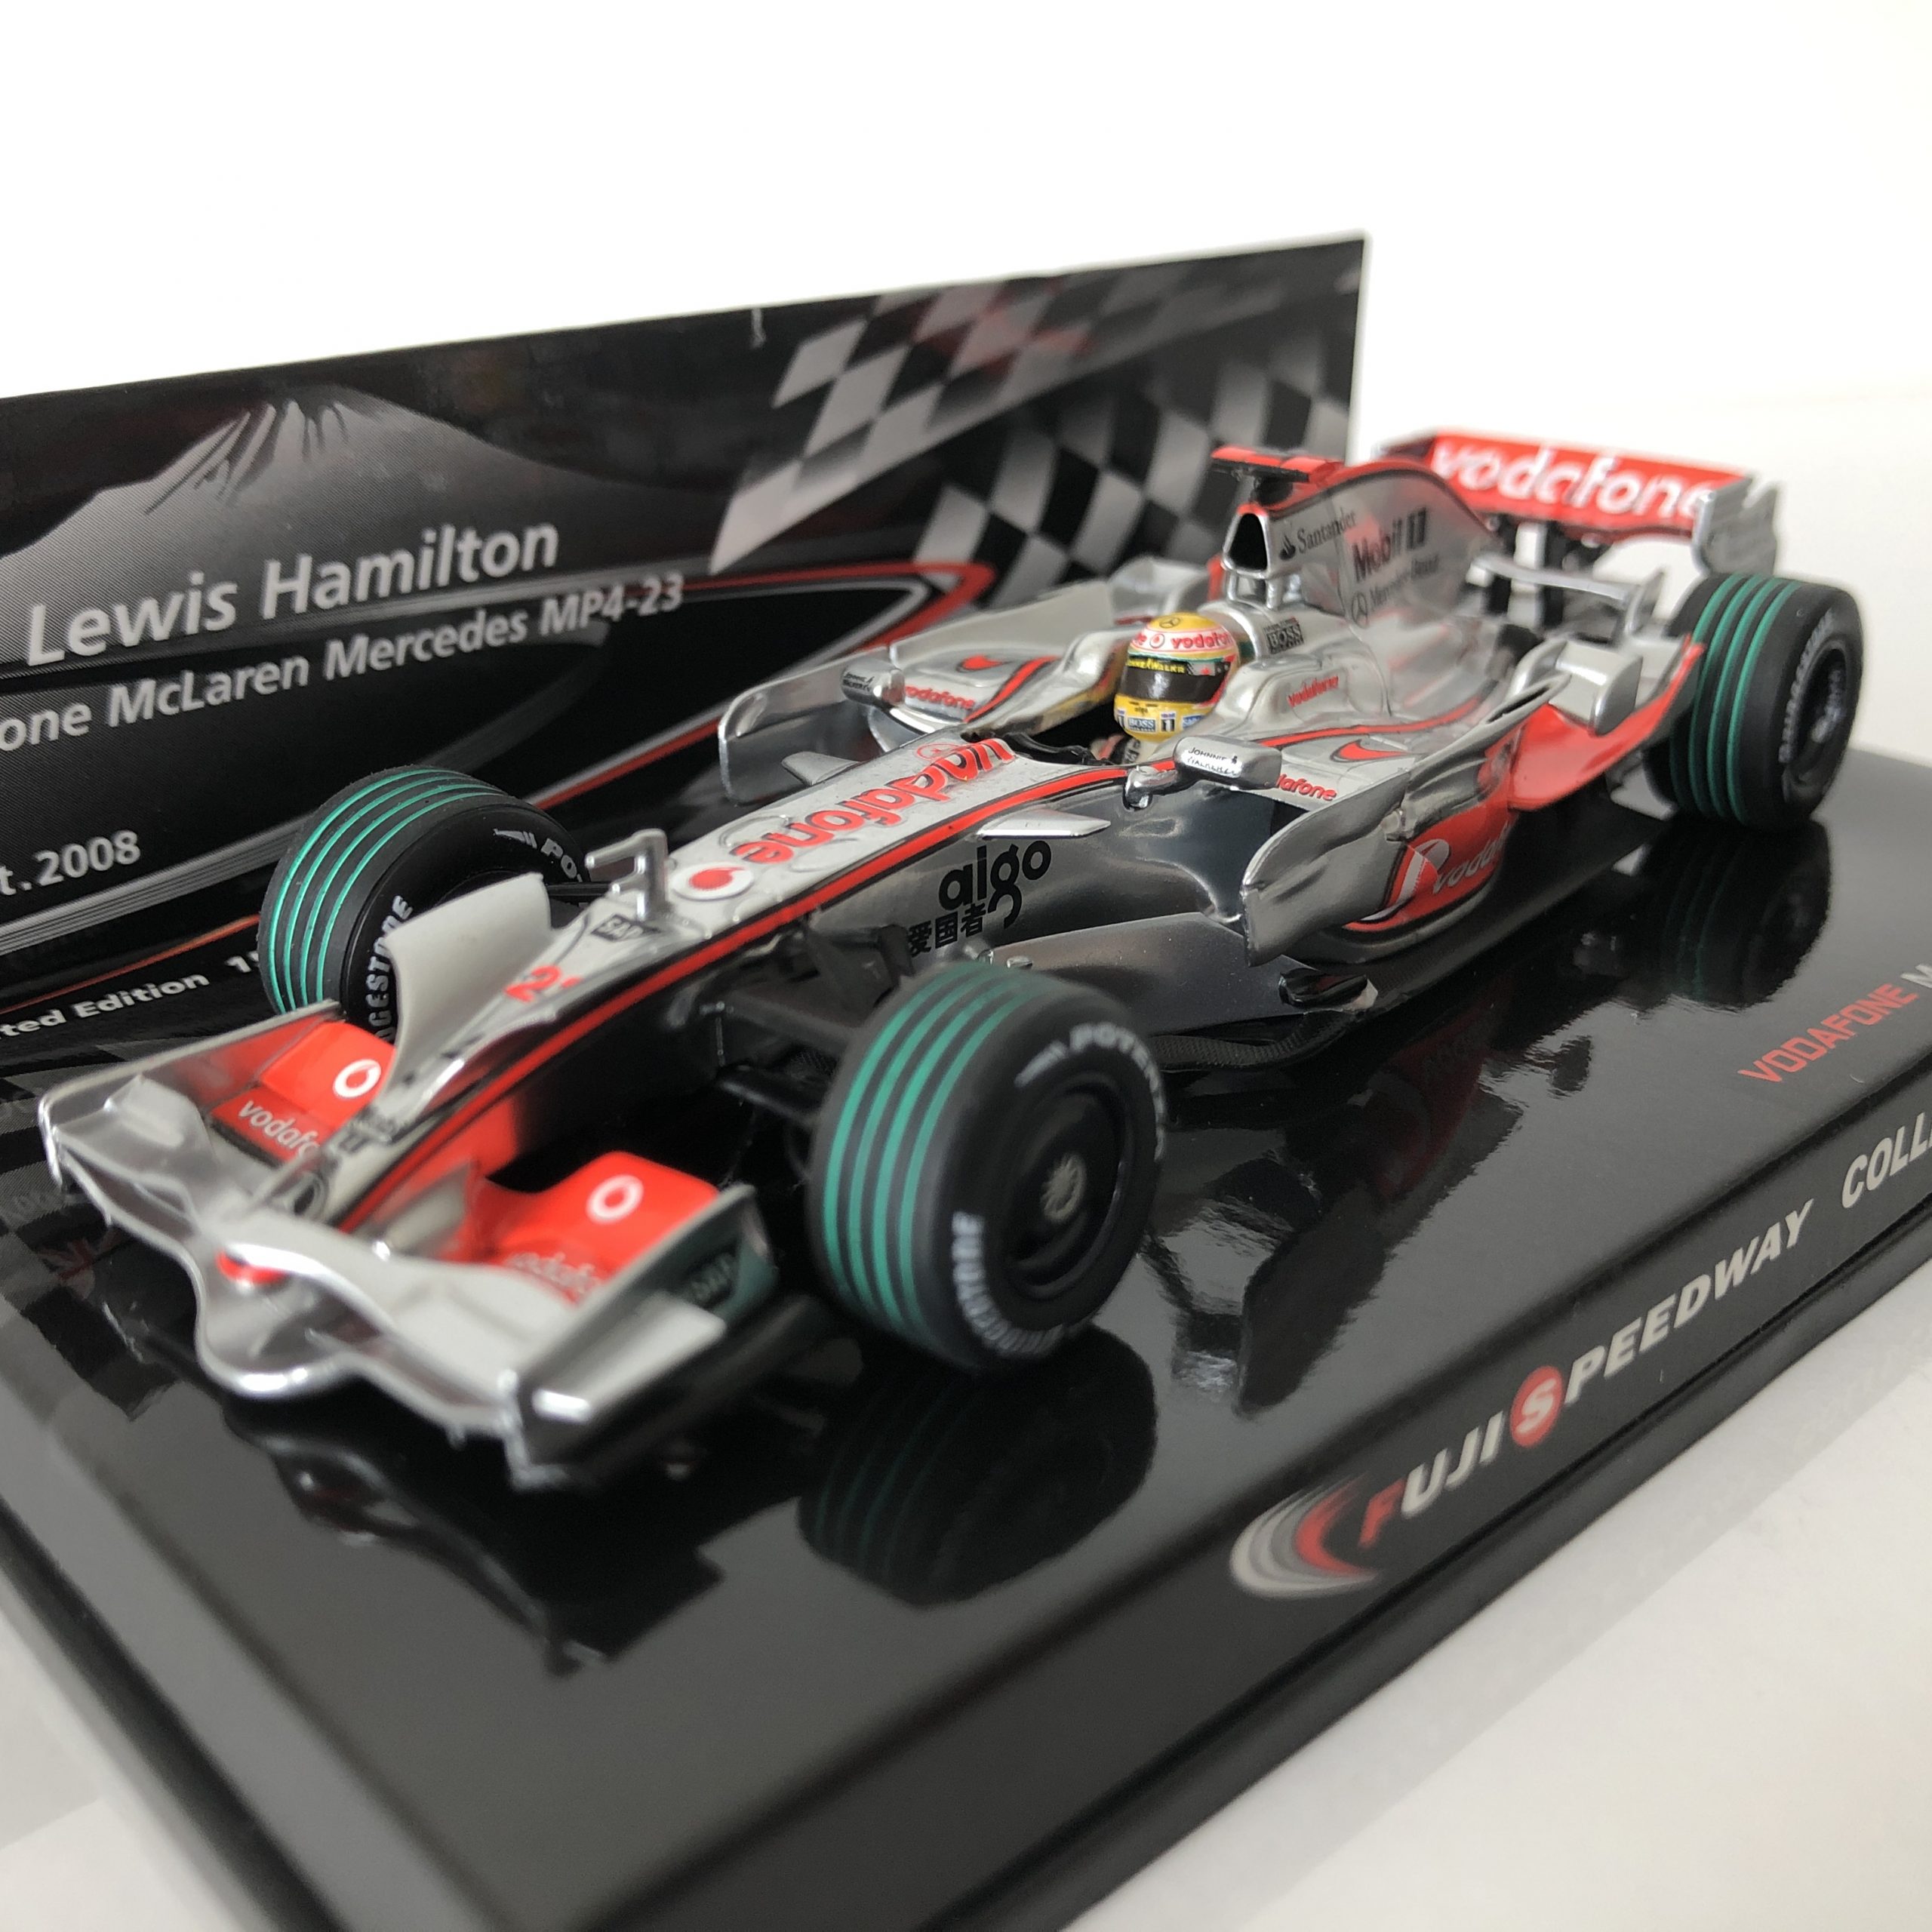 2008 Lewis Hamilton | McLaren Mercedes MP4-23 | Fuji Speedway | Minichamps  Diecast 1:43